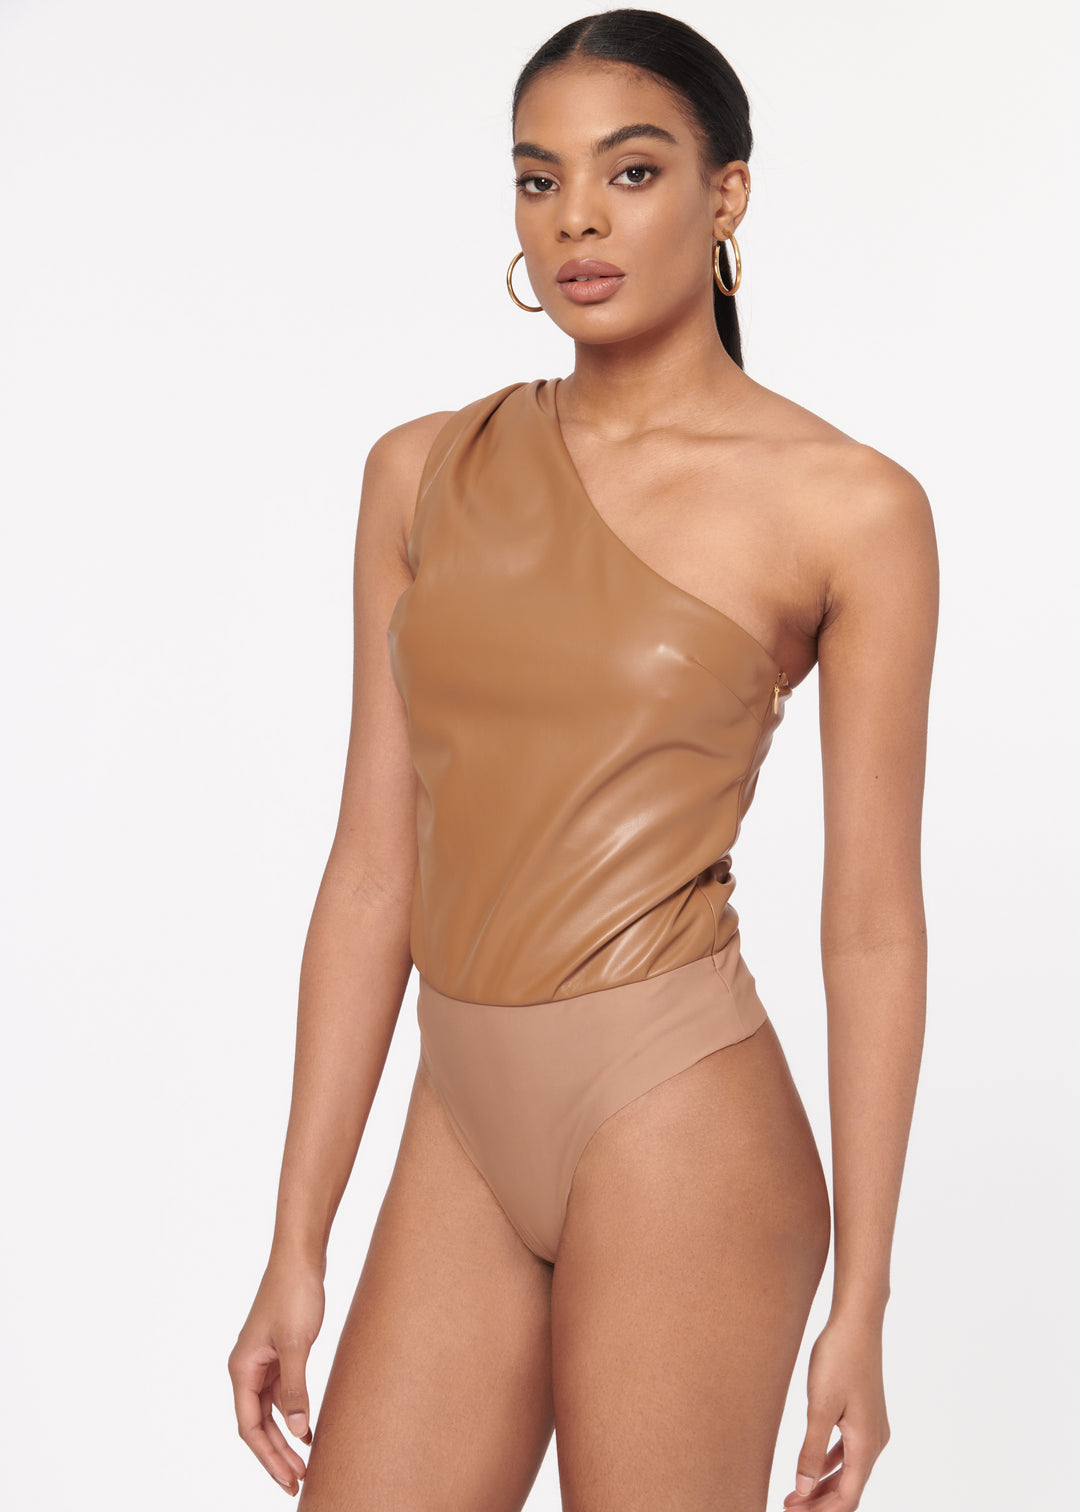 Cami NYC - Chrissa Vegan Leather Bodysuit in Caramel